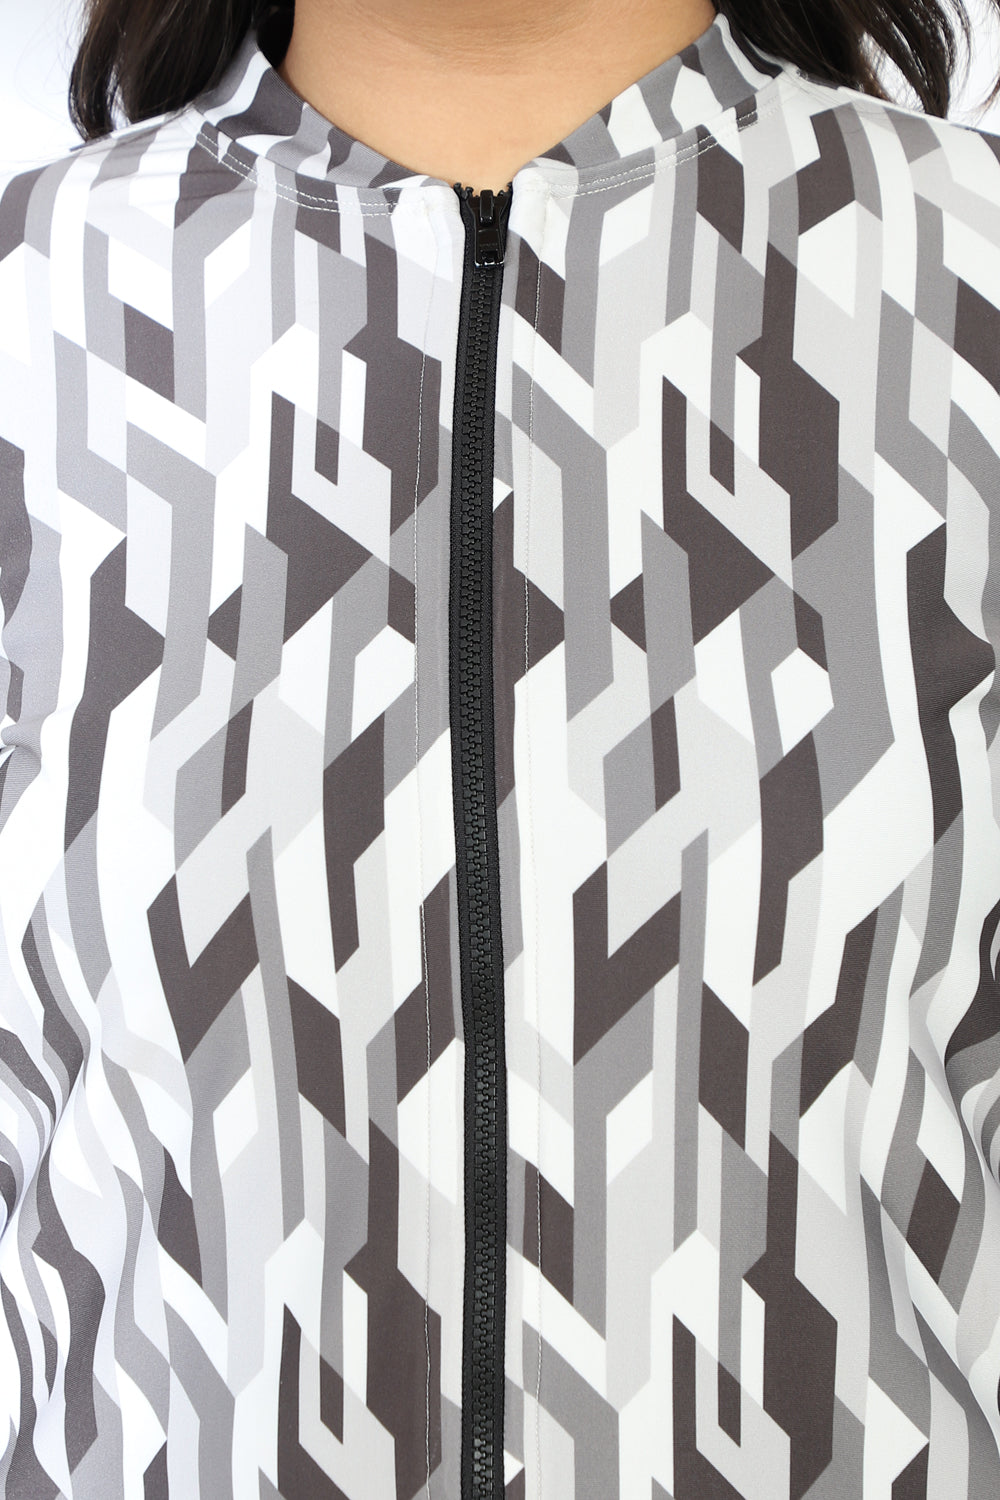 Plus Size Geometric Camouflage Printed Jacket